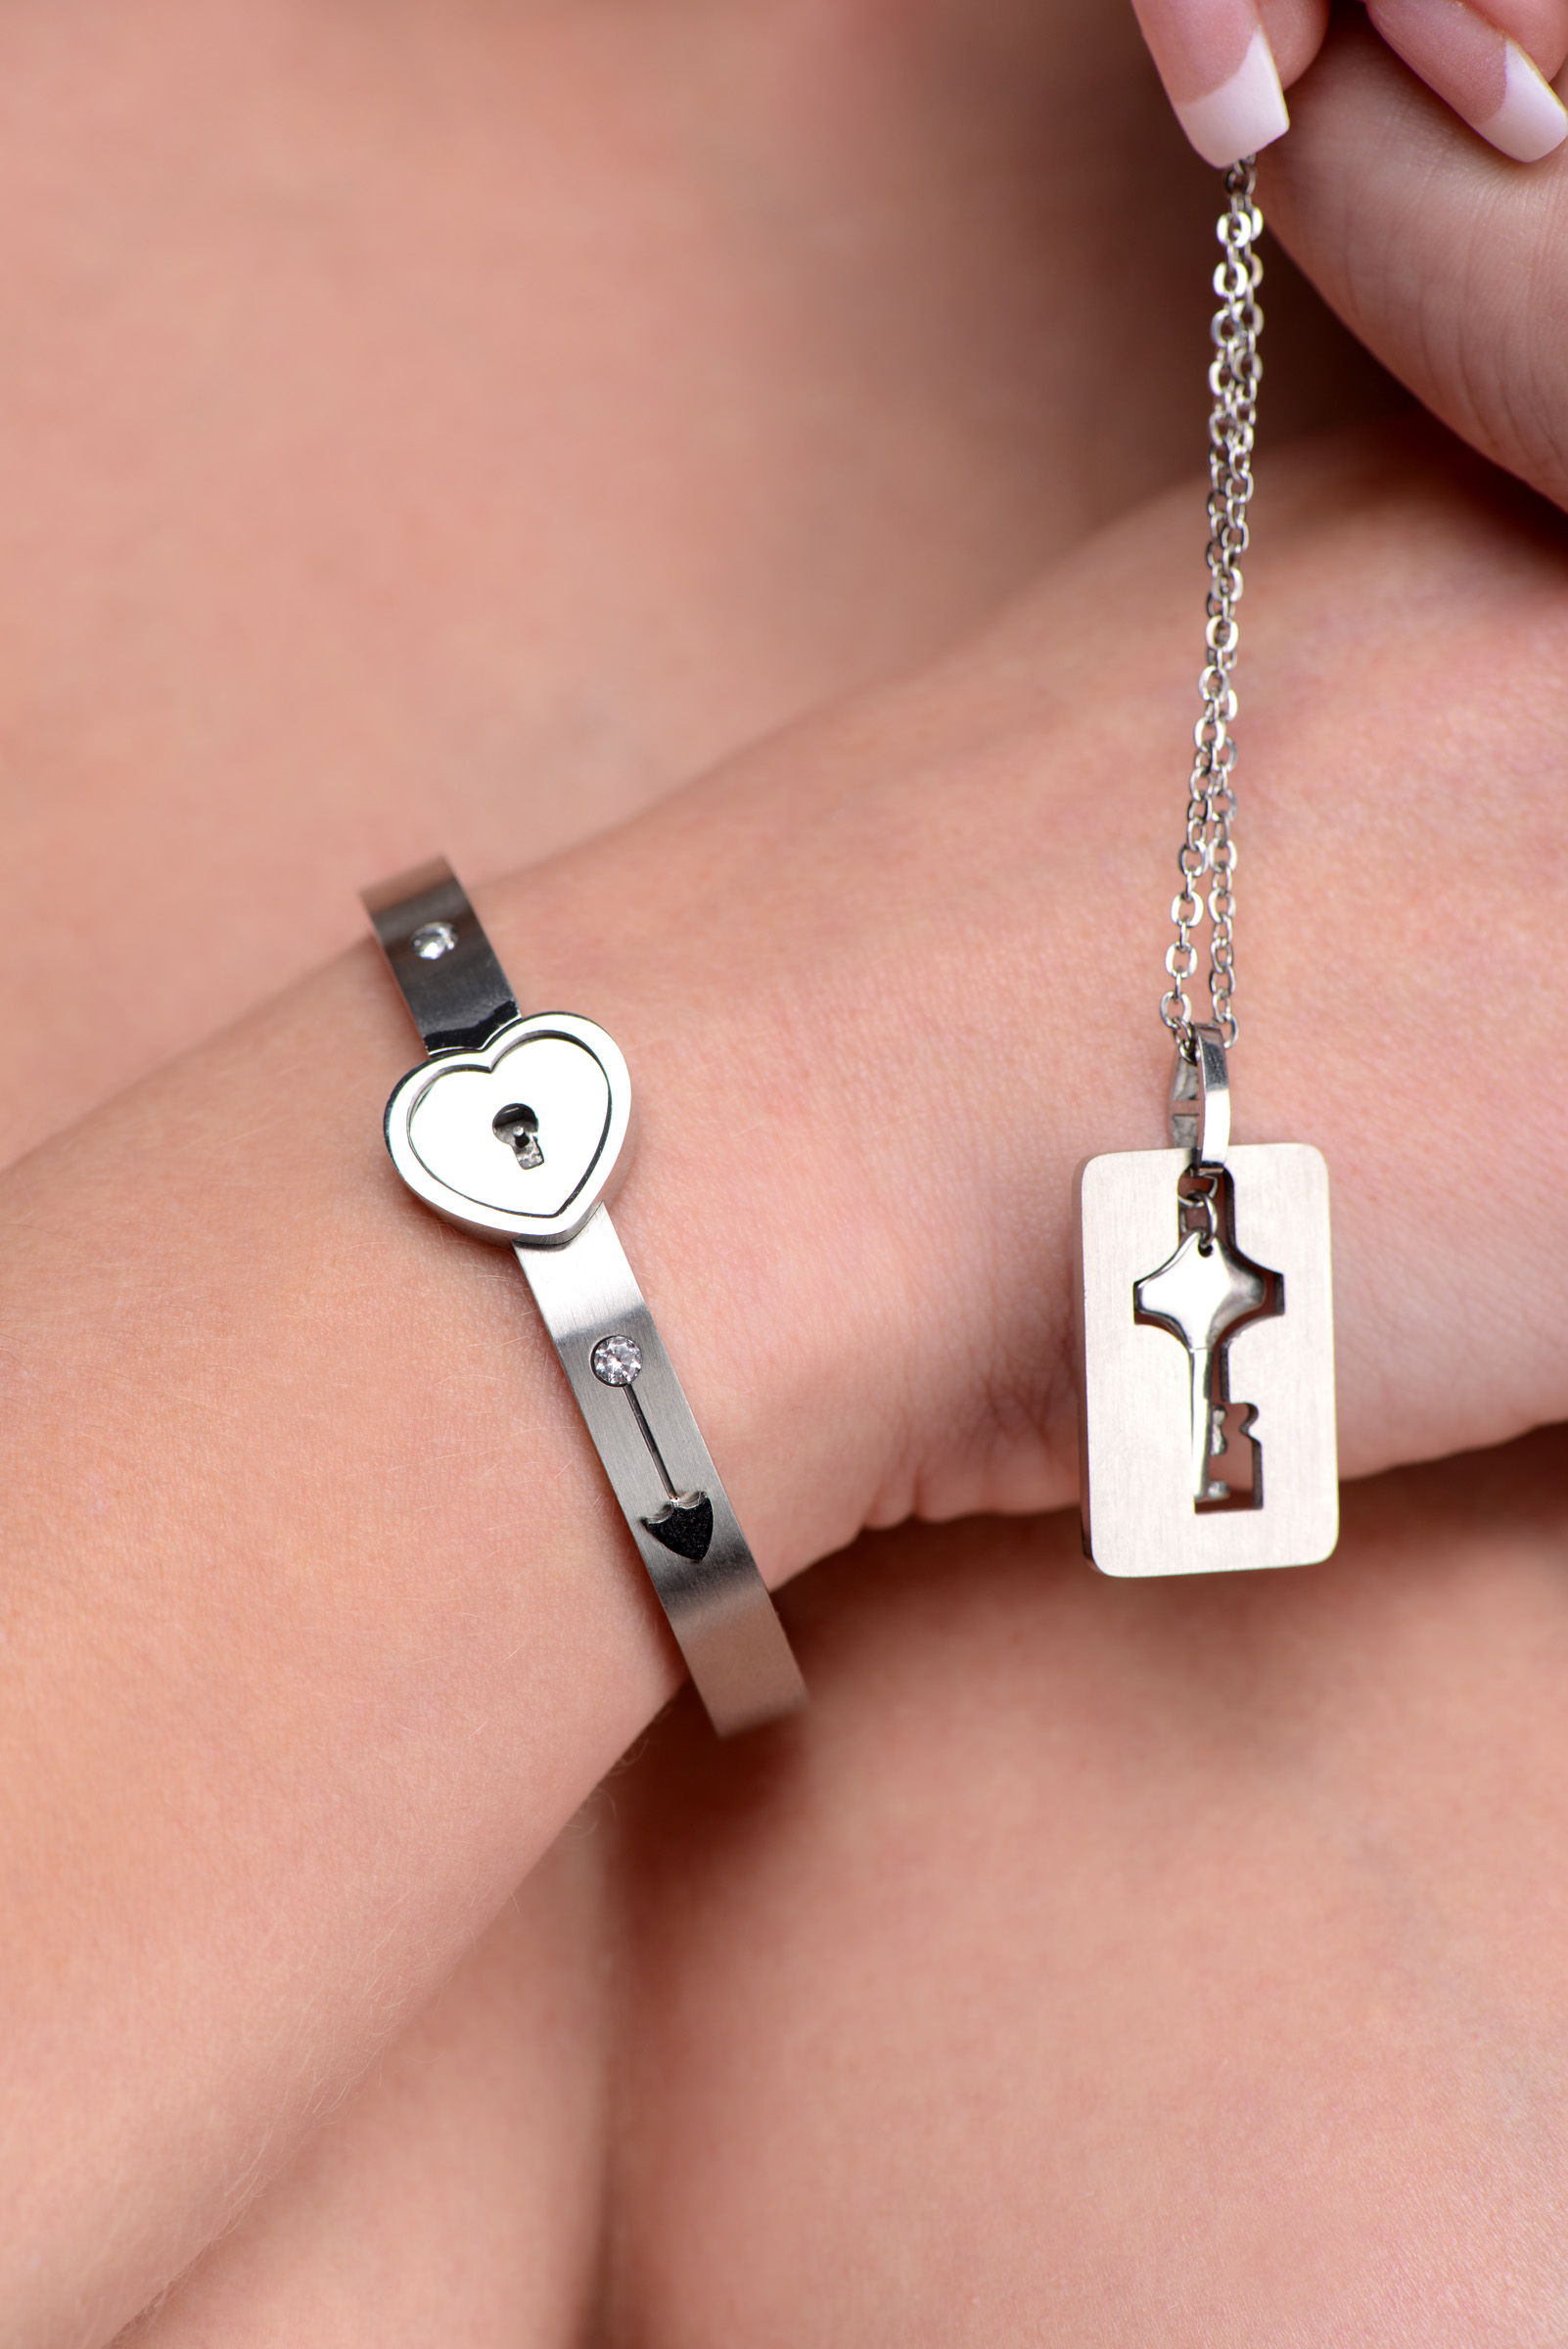 Cuffed+Locking+Bracelet+and+Key+Necklace